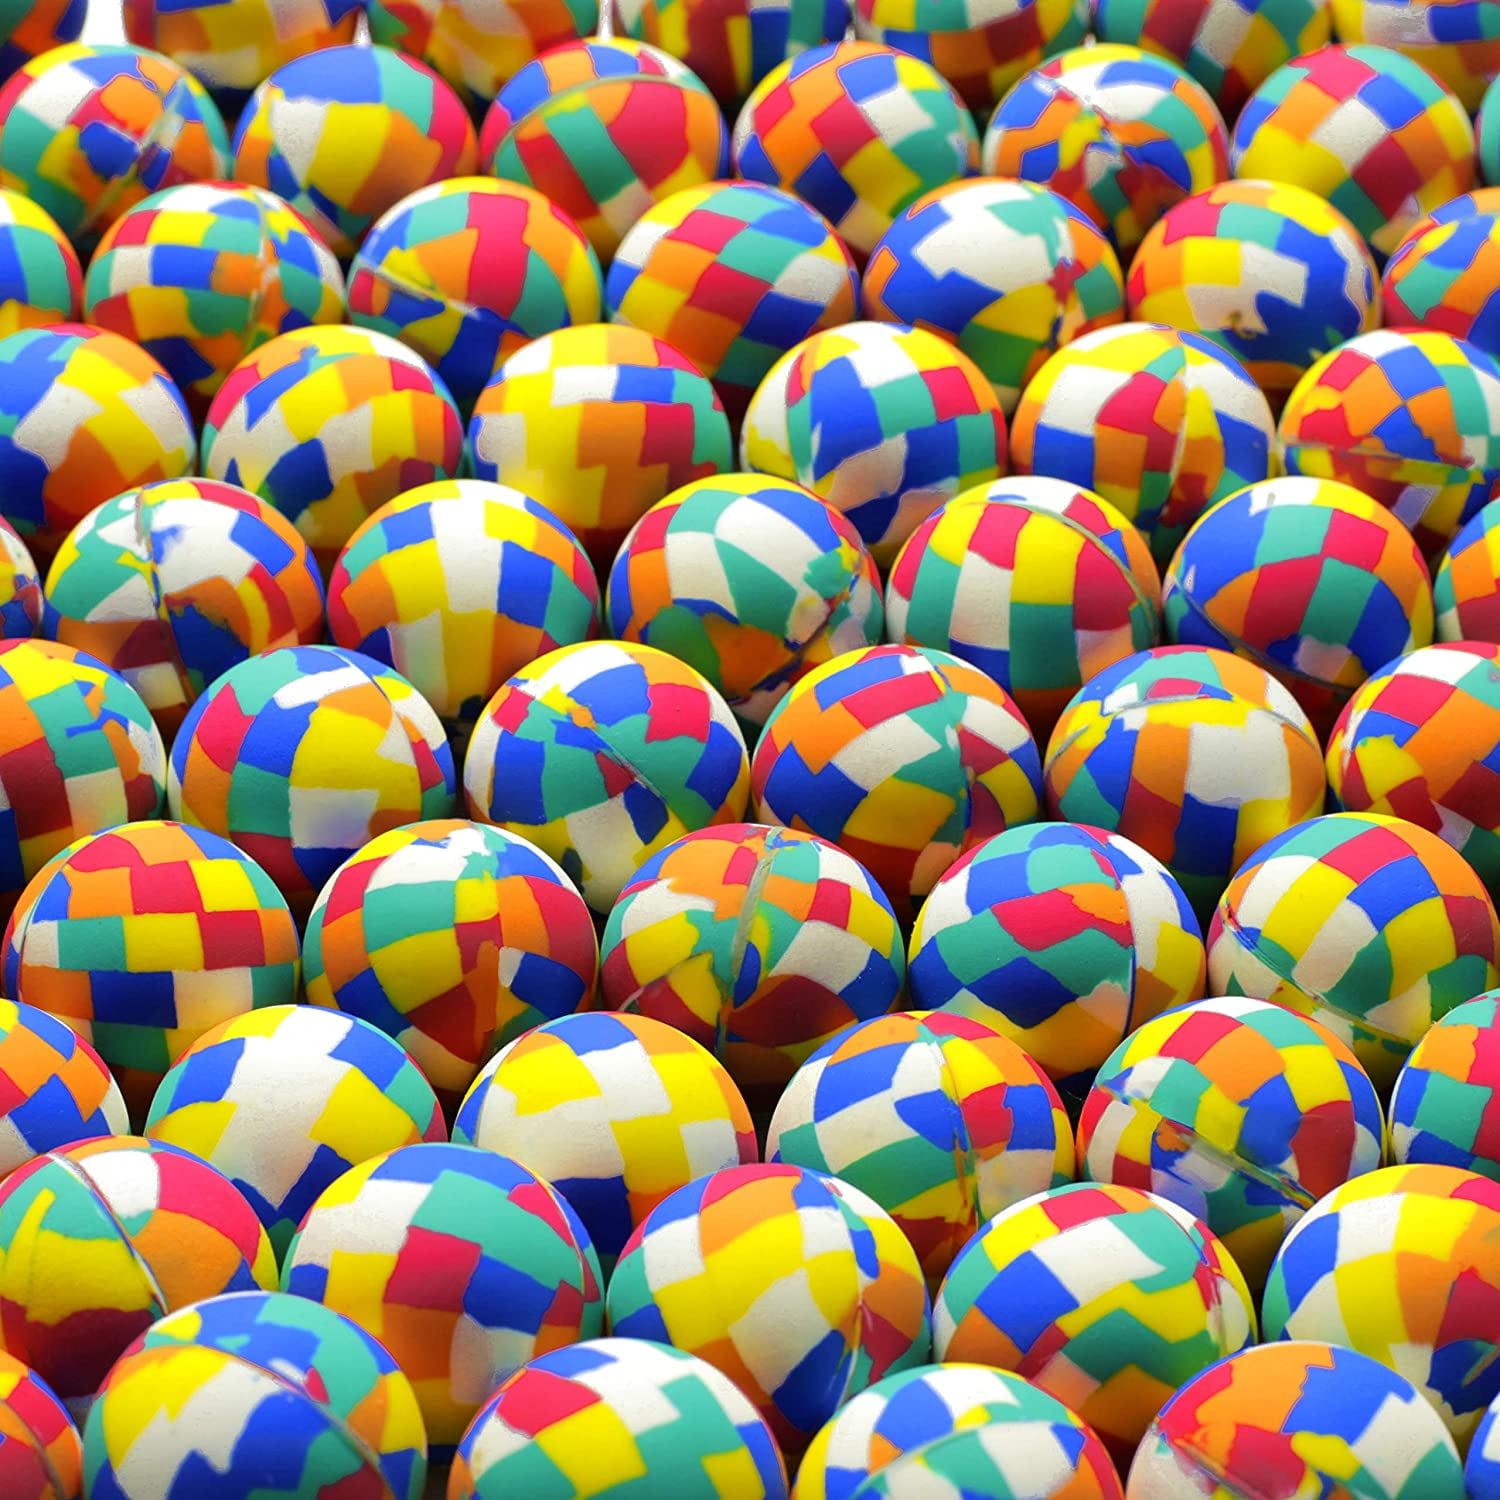 Bouncy balls. Baby TV bouncy balls. Party balls